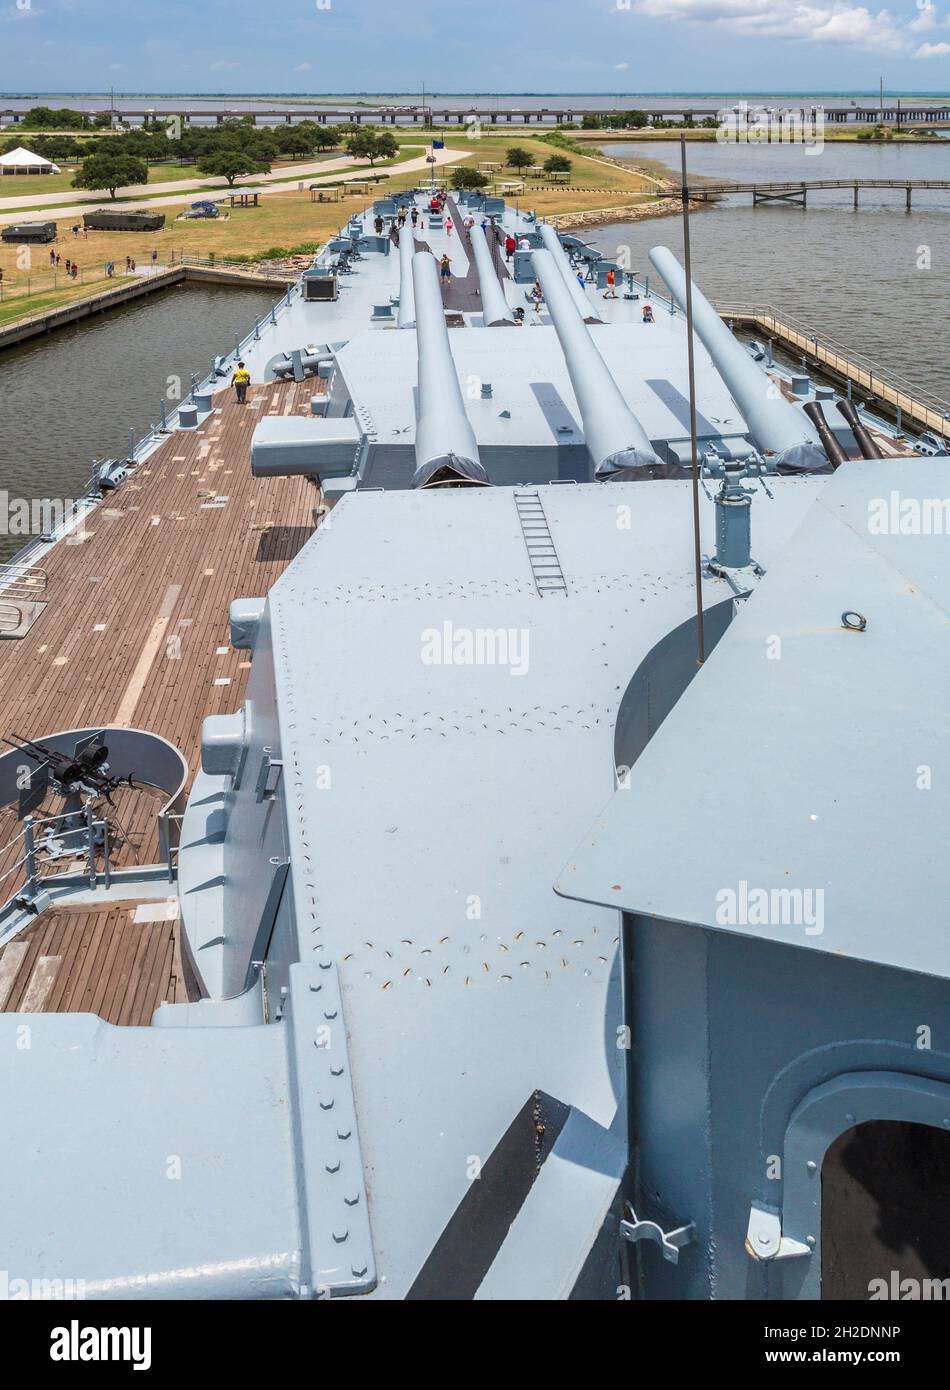 16 pollici, calibro 45 'Big Guns' sulla nave da battaglia del museo USS Alabama al Battleship Memorial Park a Mobile, Alabama Foto Stock